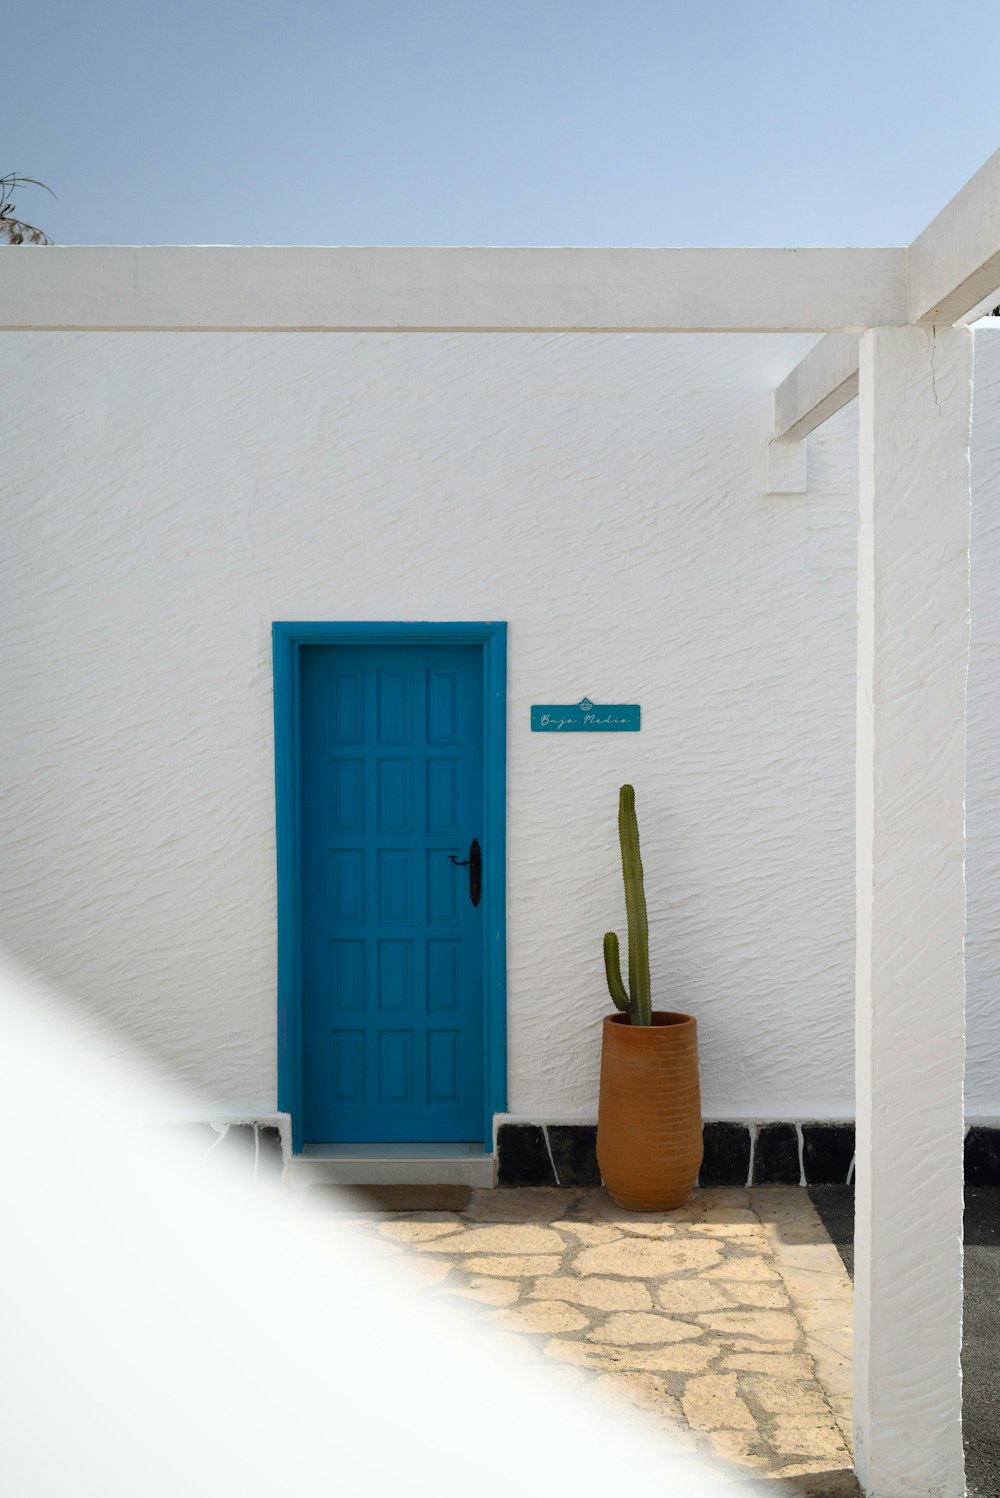 a cactus in a pot next to a blue door